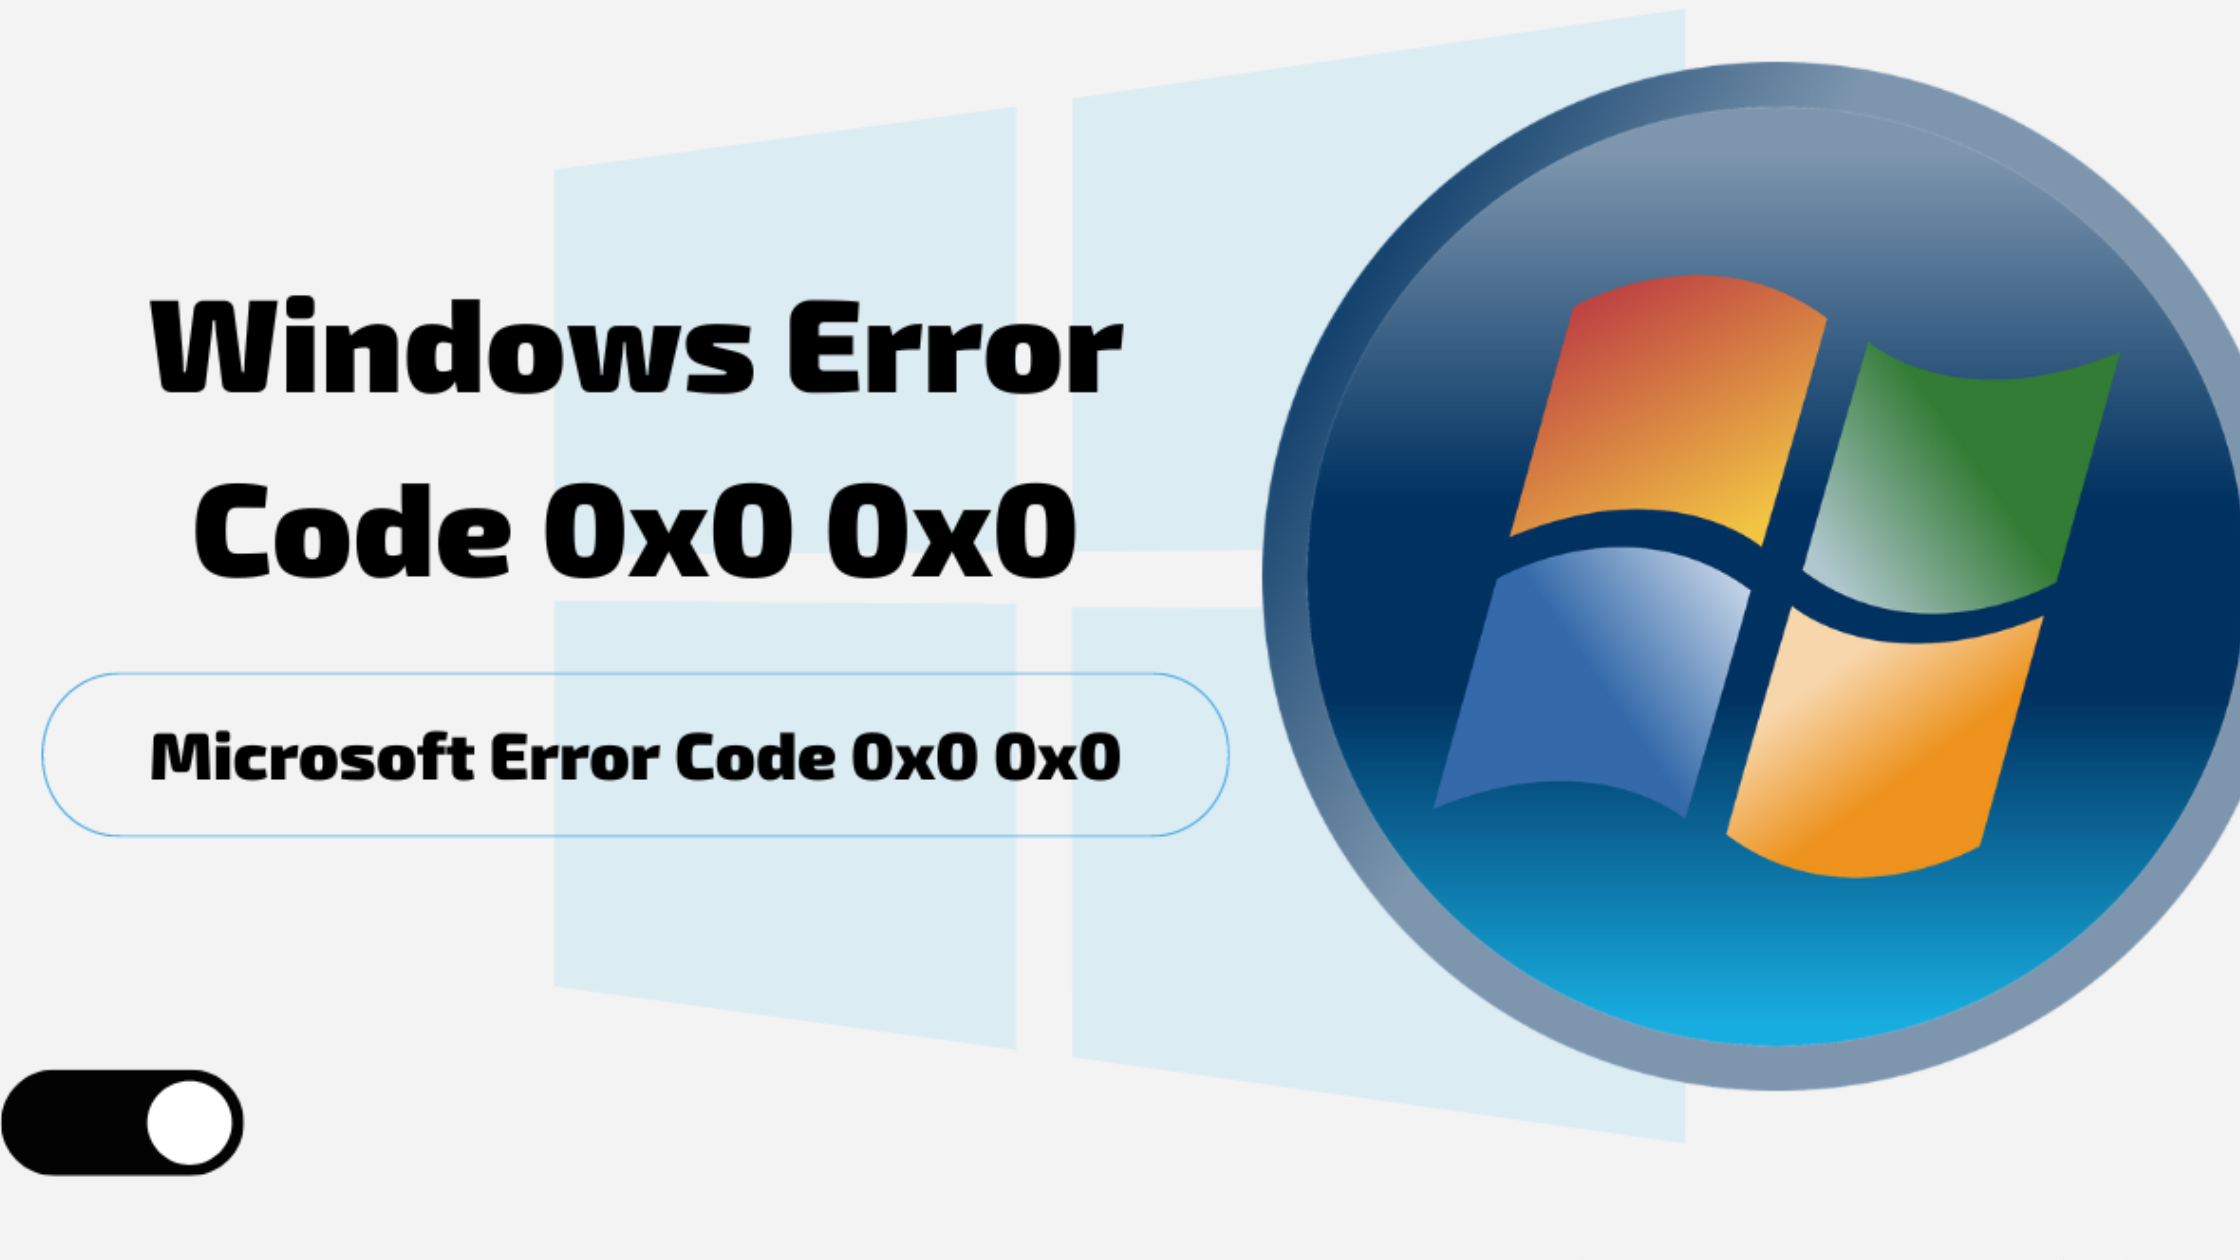 Error Code 0x0 0x0